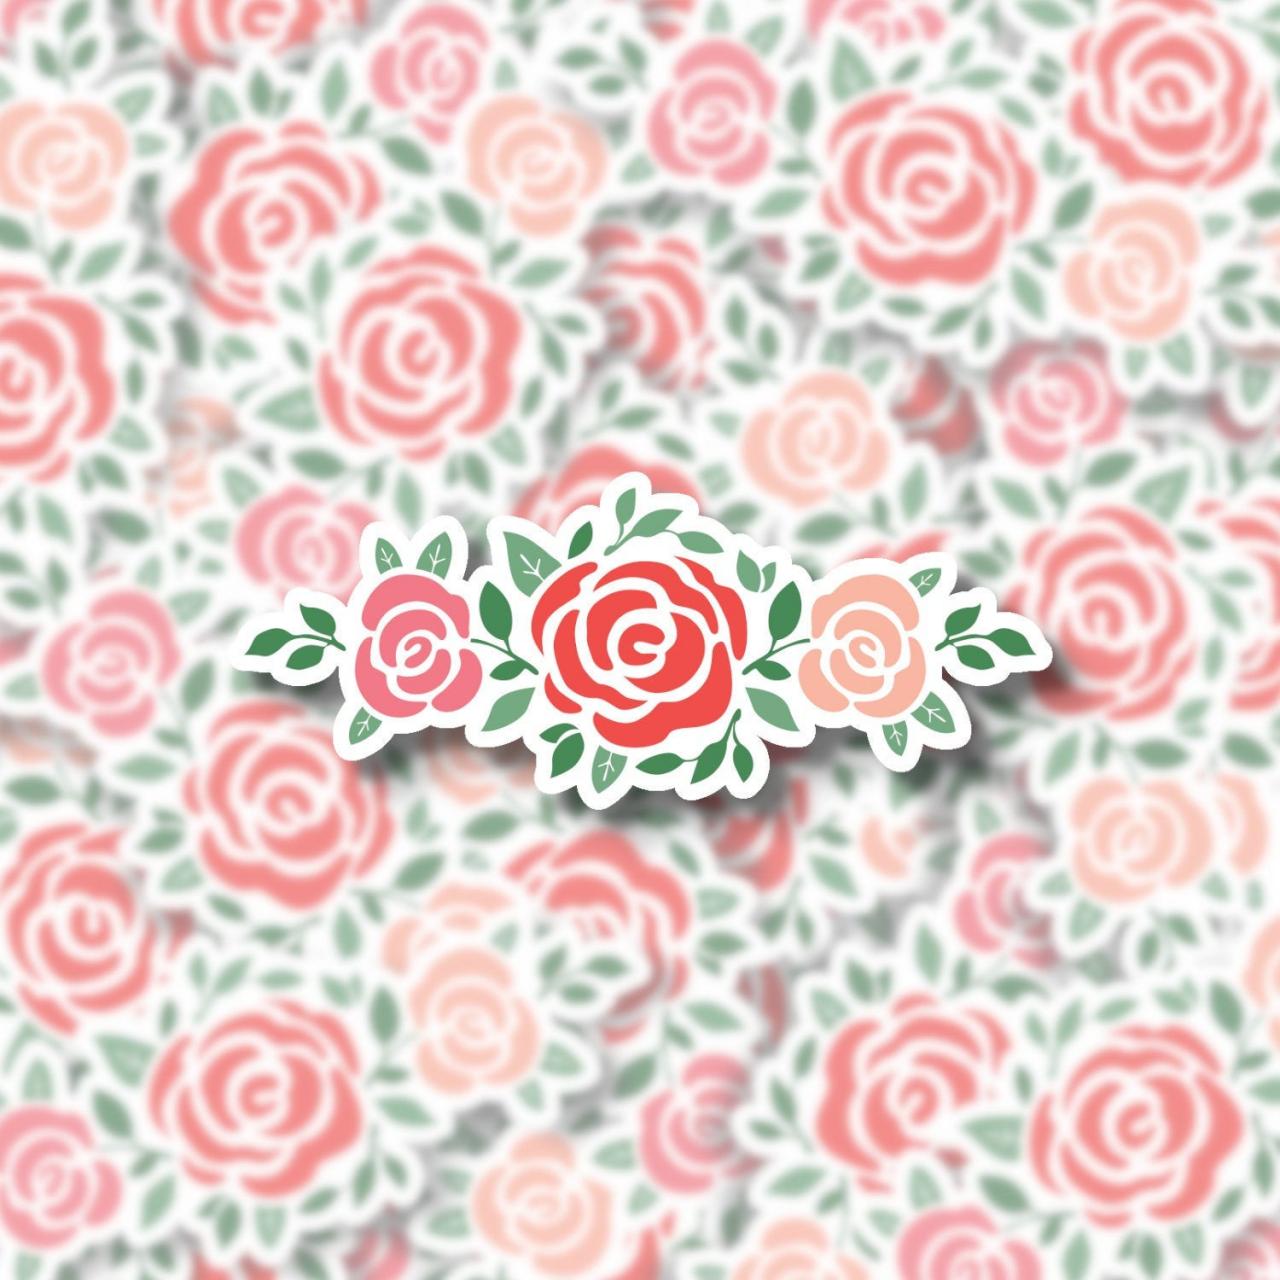 Rose Sticker Decal | Roses Sticker Decal | Cluster Roses Sticker Decal | Laptop Sticker Decal | Water Bottle Sticker Decal | Planner Sticker